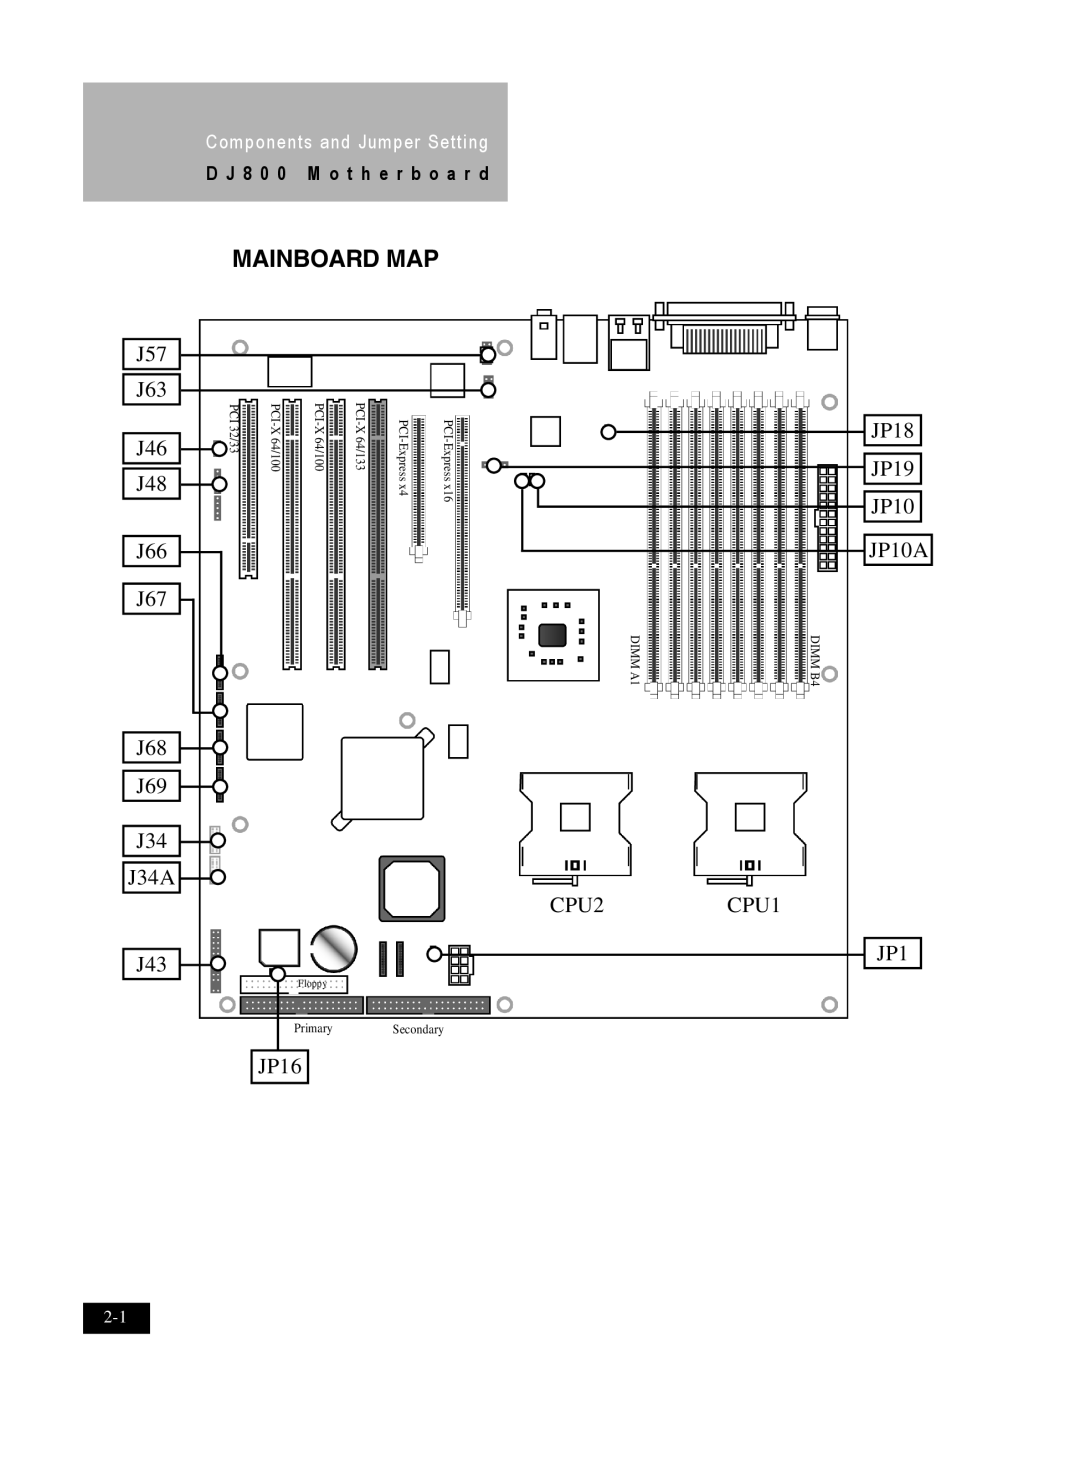 IBM DJ800 Mainboard Map Mainboard Map, Components and Jumper Setting, D J 8 0 0 M o t h e r b o a r d, Primary Secondary 